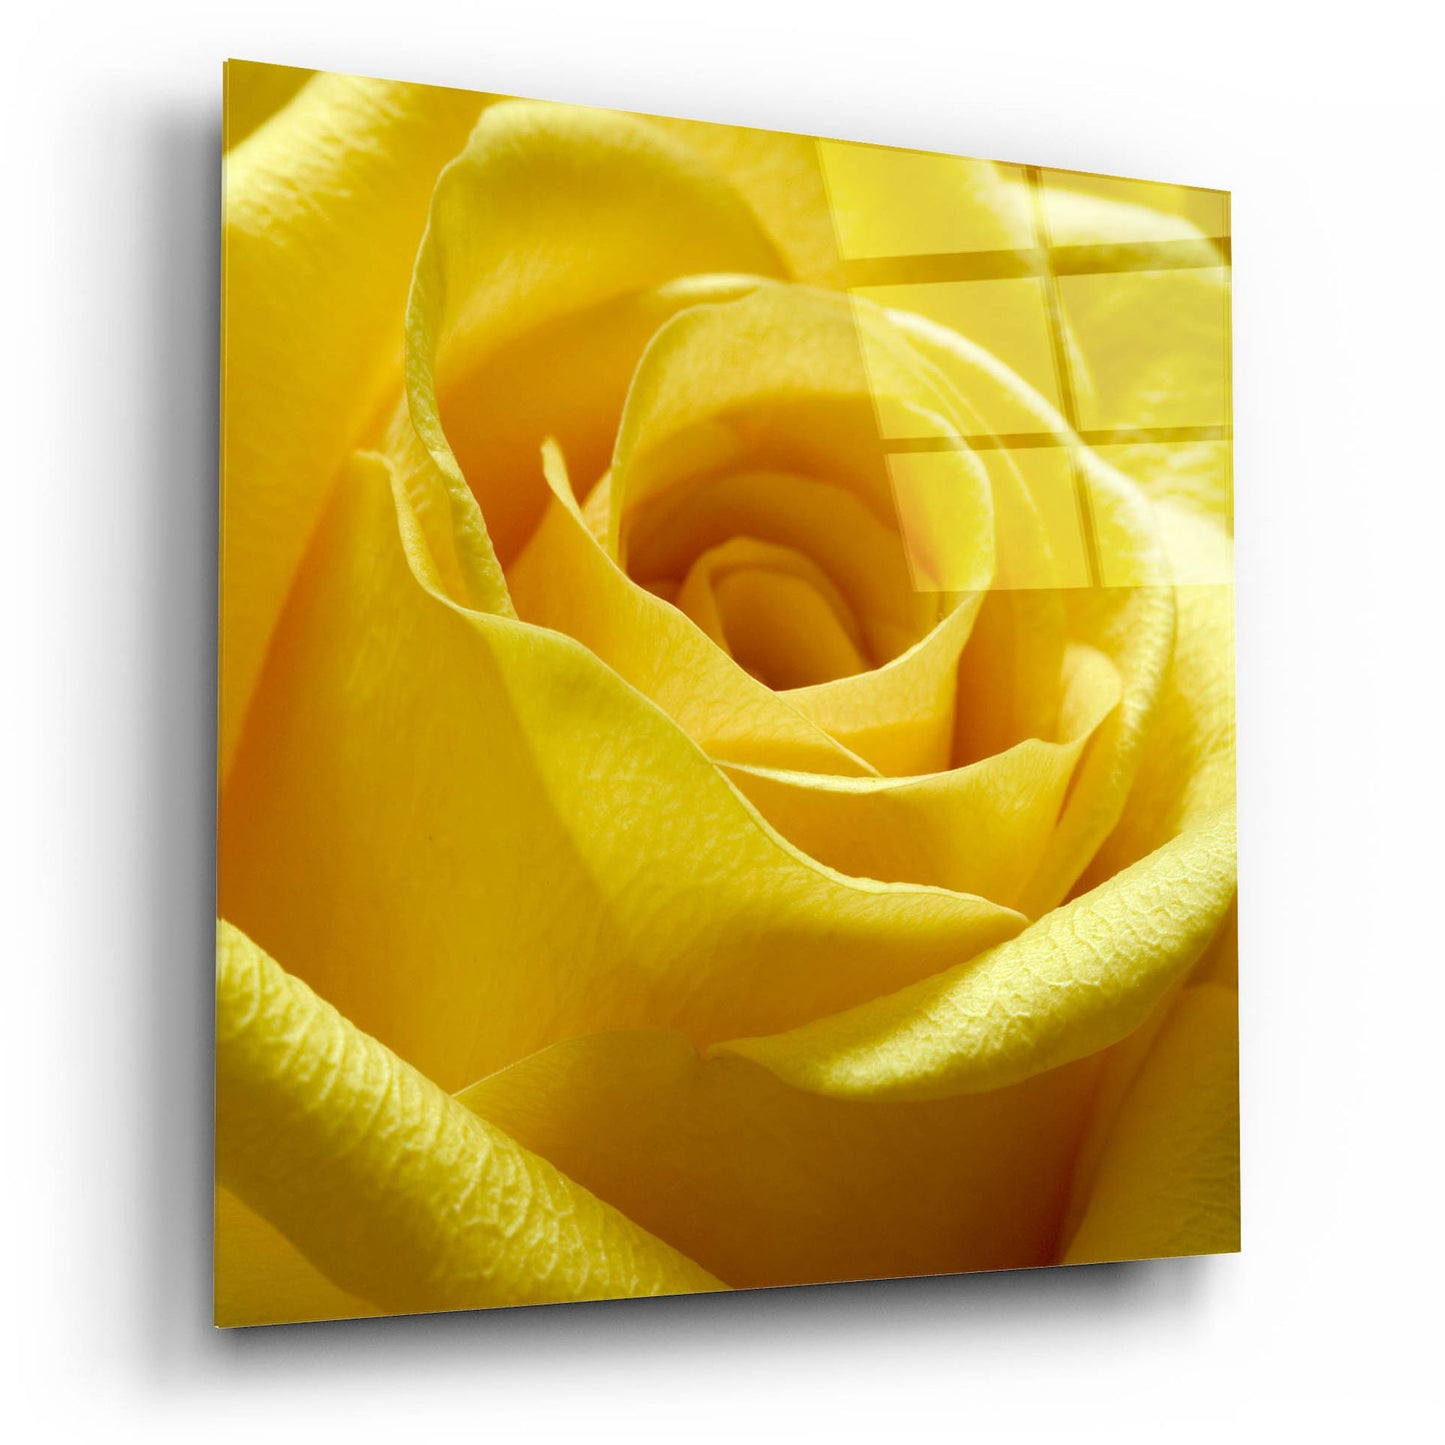 Epic Art 'Yellow Rose' by Photoinc Studio, Acrylic Glass Wall Art,12x12